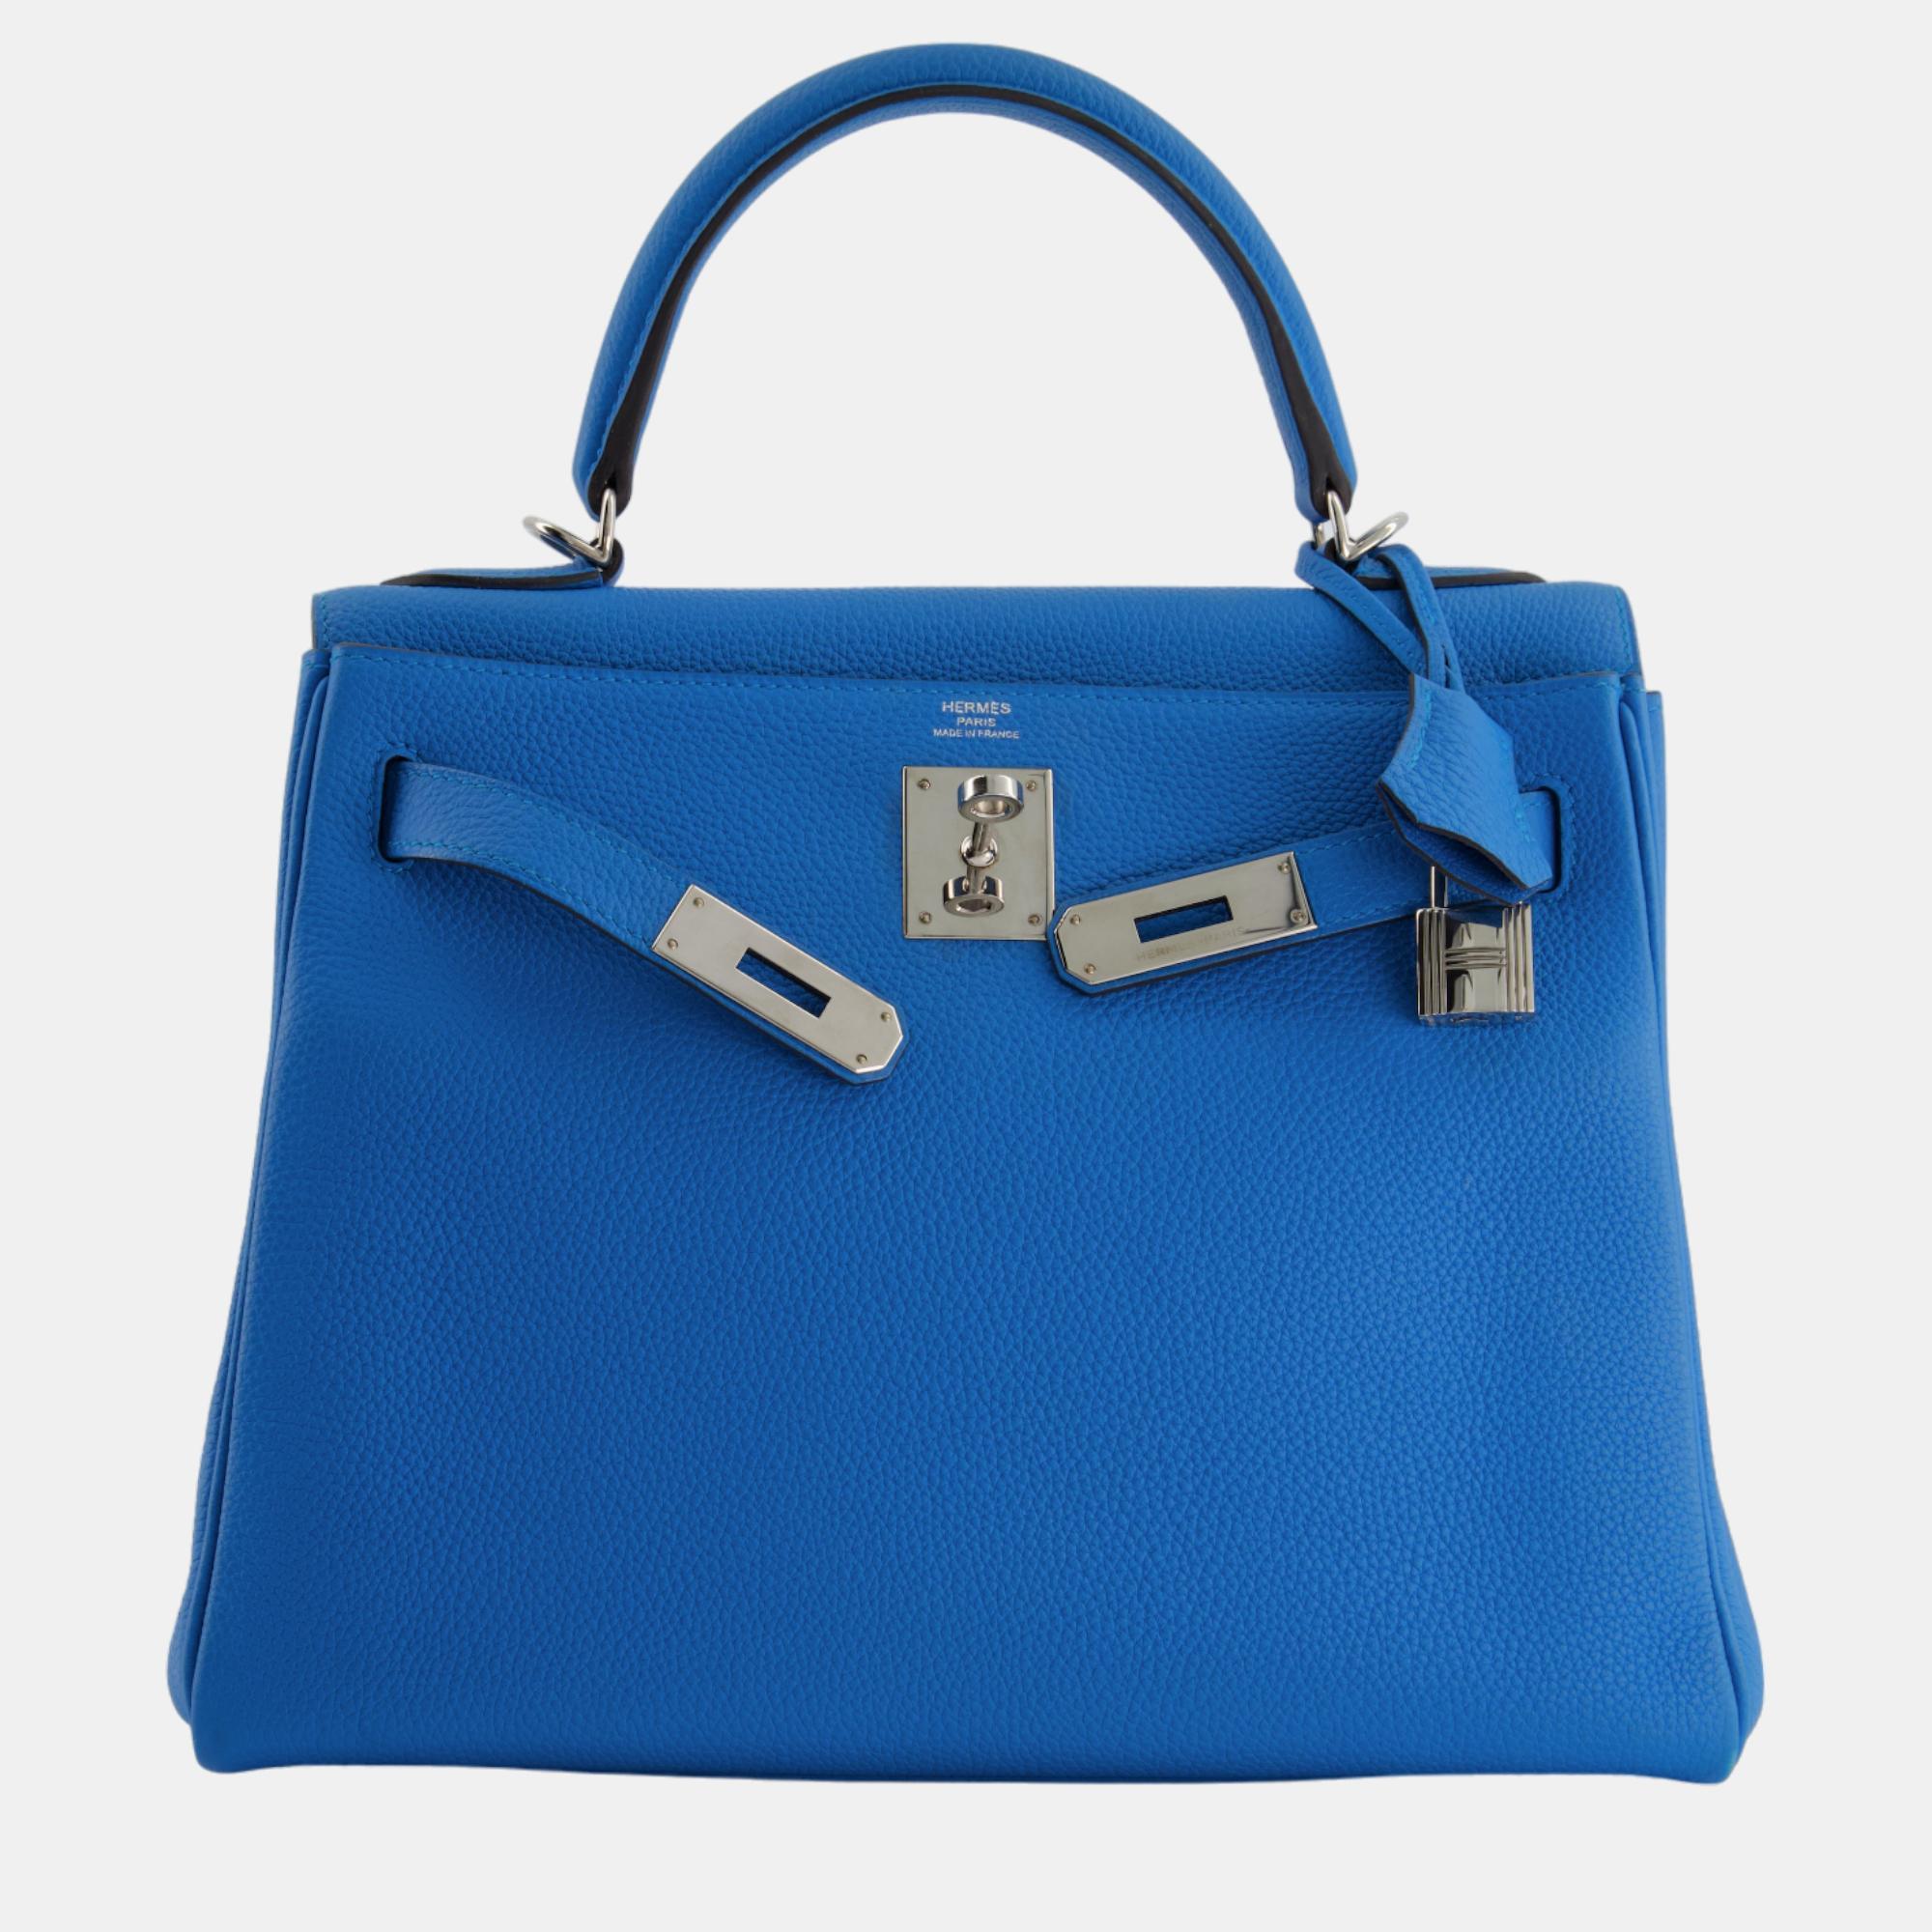 Hermes Kelly Retourne 28cm Bag In Bleu Zanzibar Togo Leather With Palladium Hardware